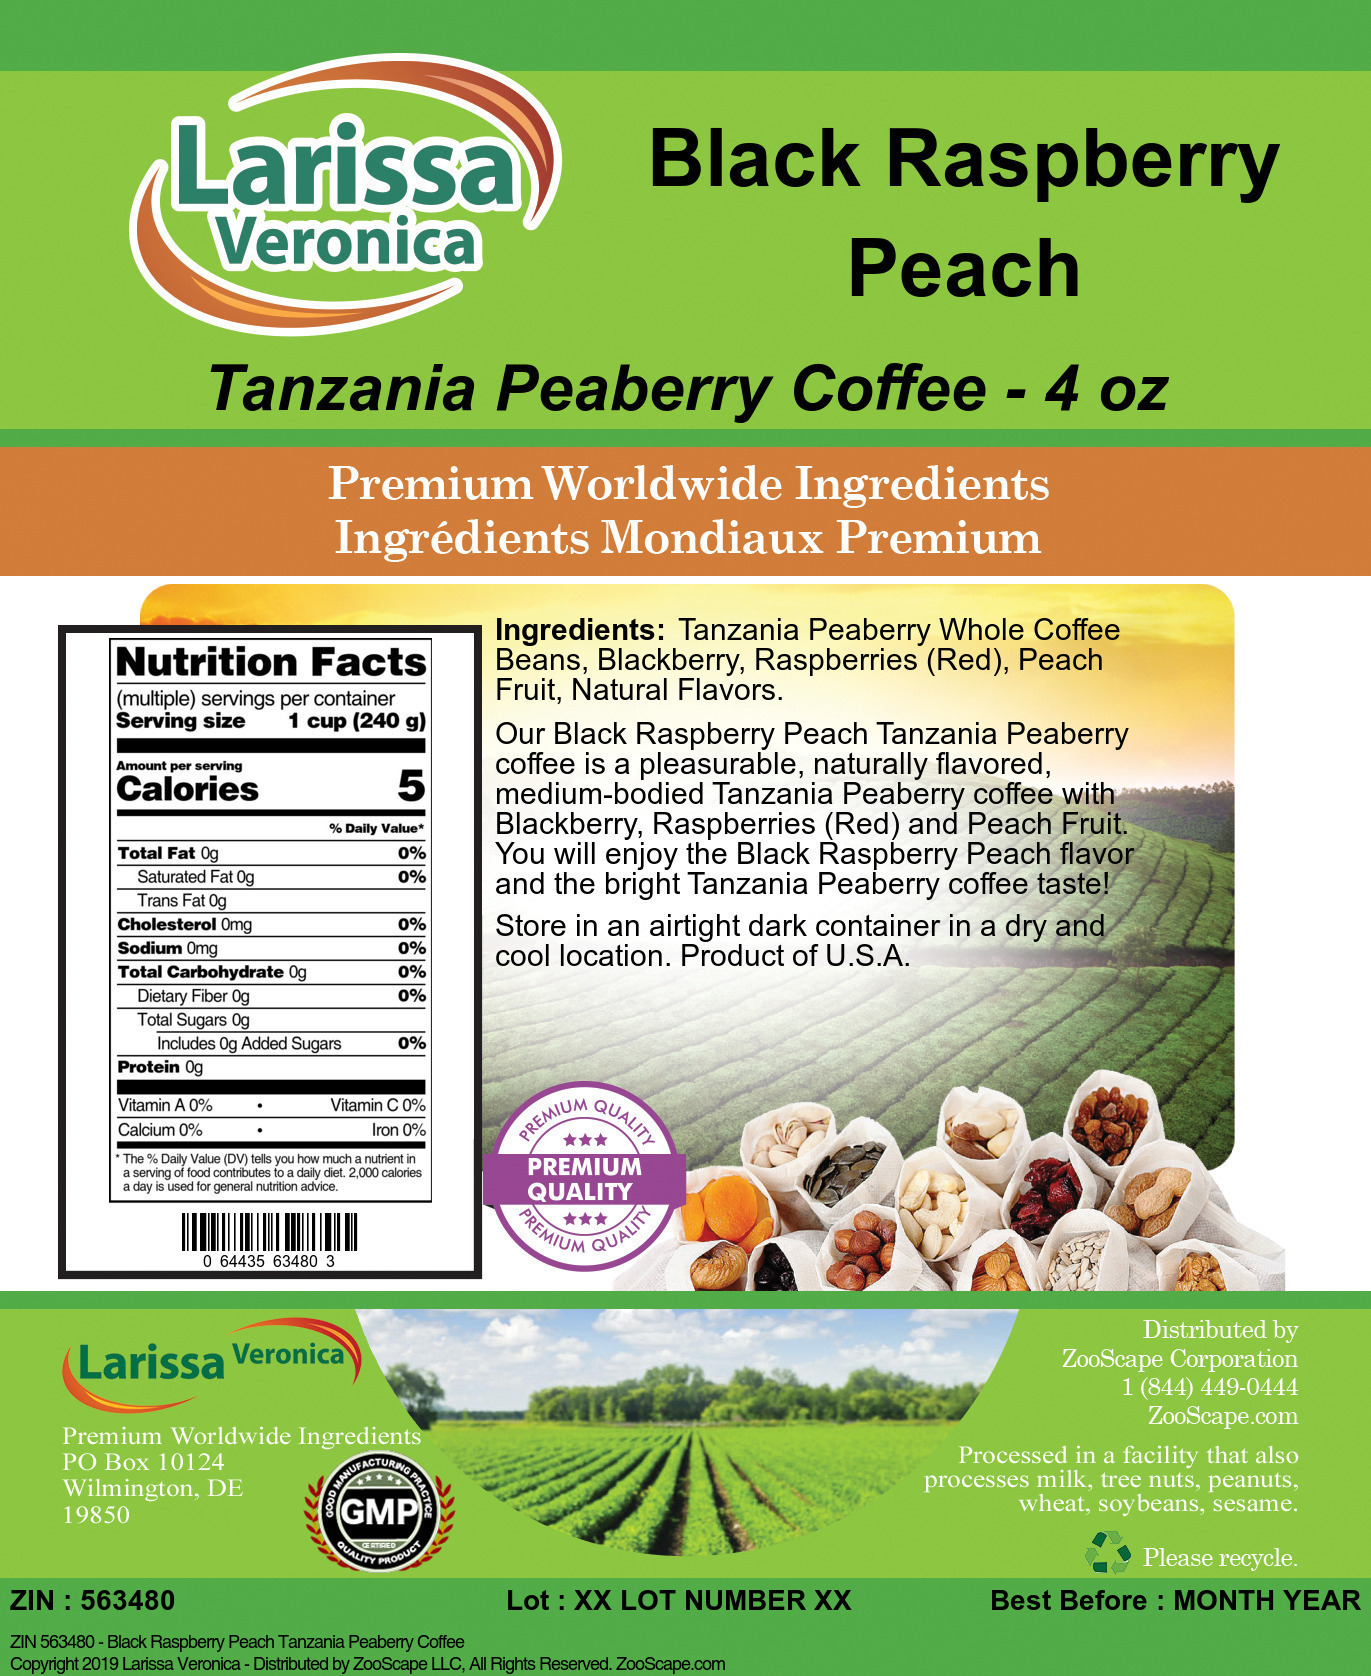 Black Raspberry Peach Tanzania Peaberry Coffee - Label